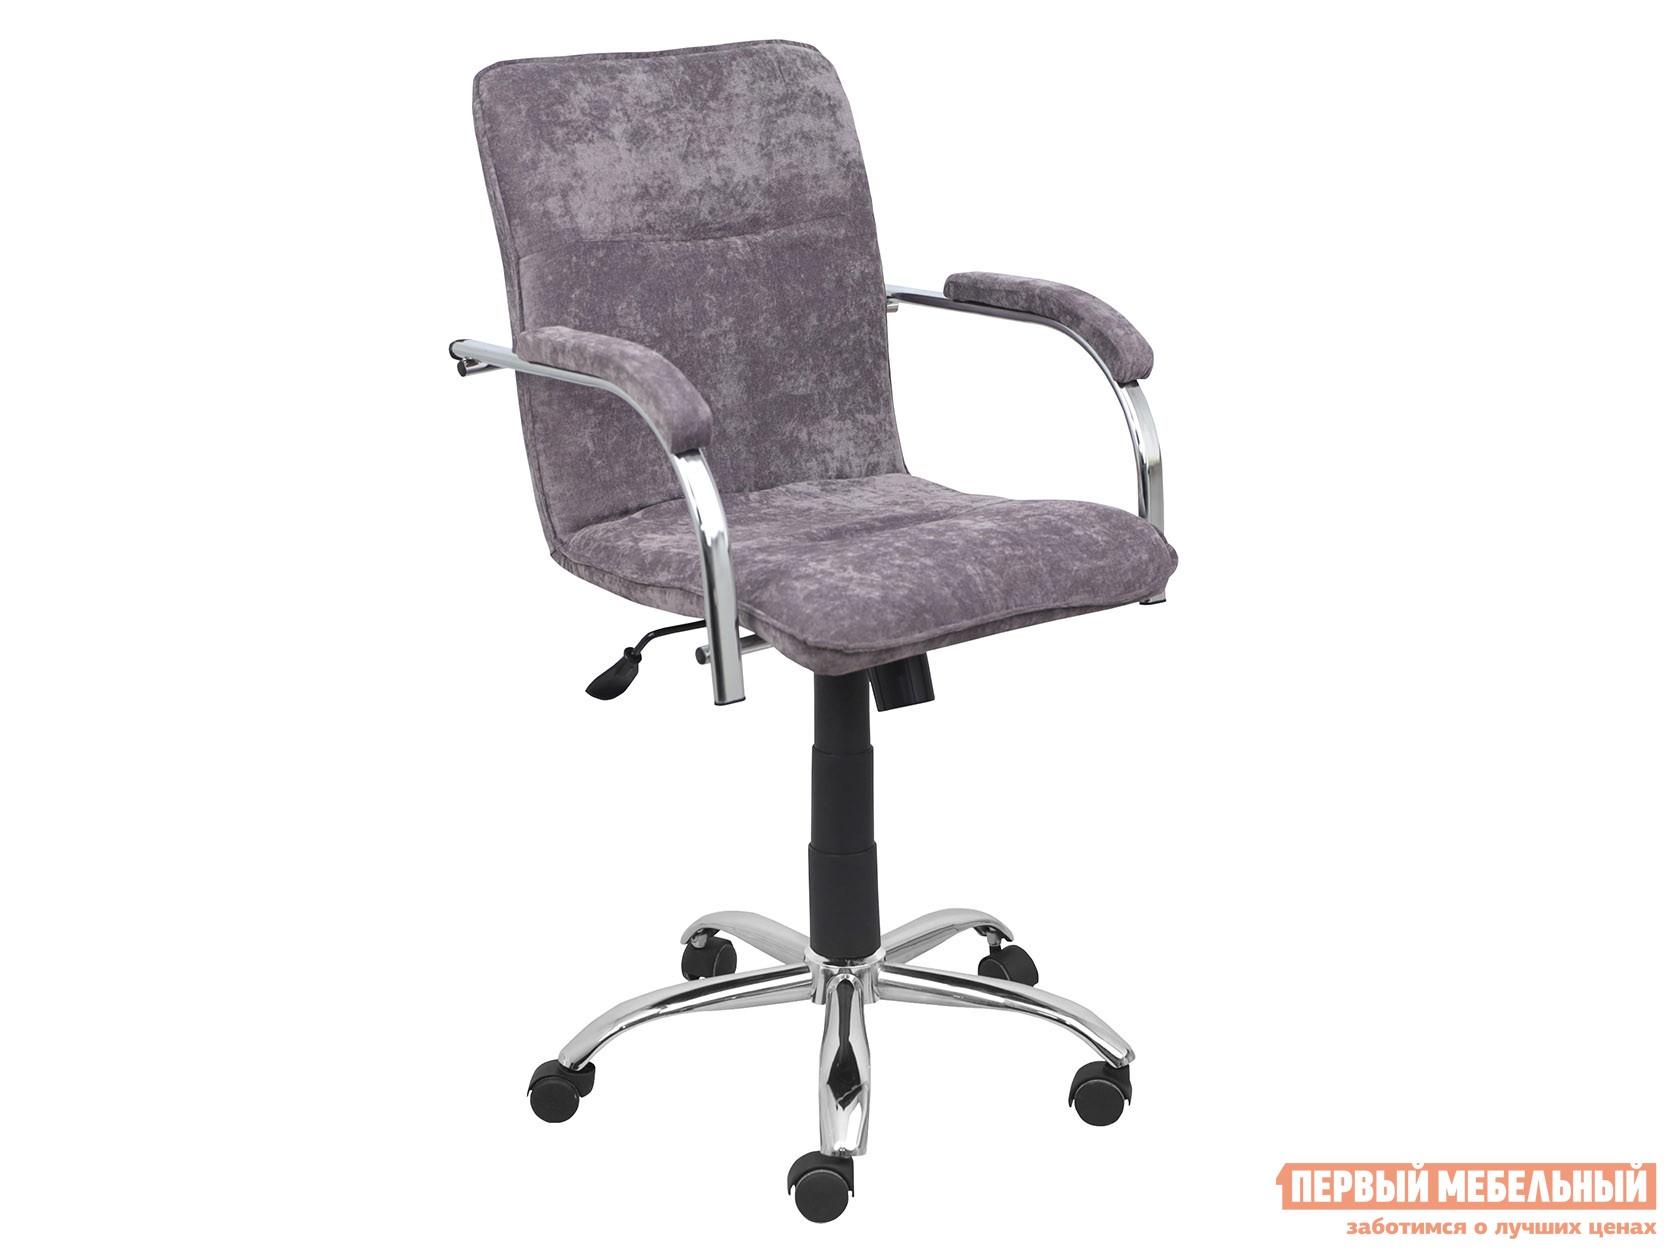 Офисное кресло samba aks-2 серый, велюр, мягкие preview 1